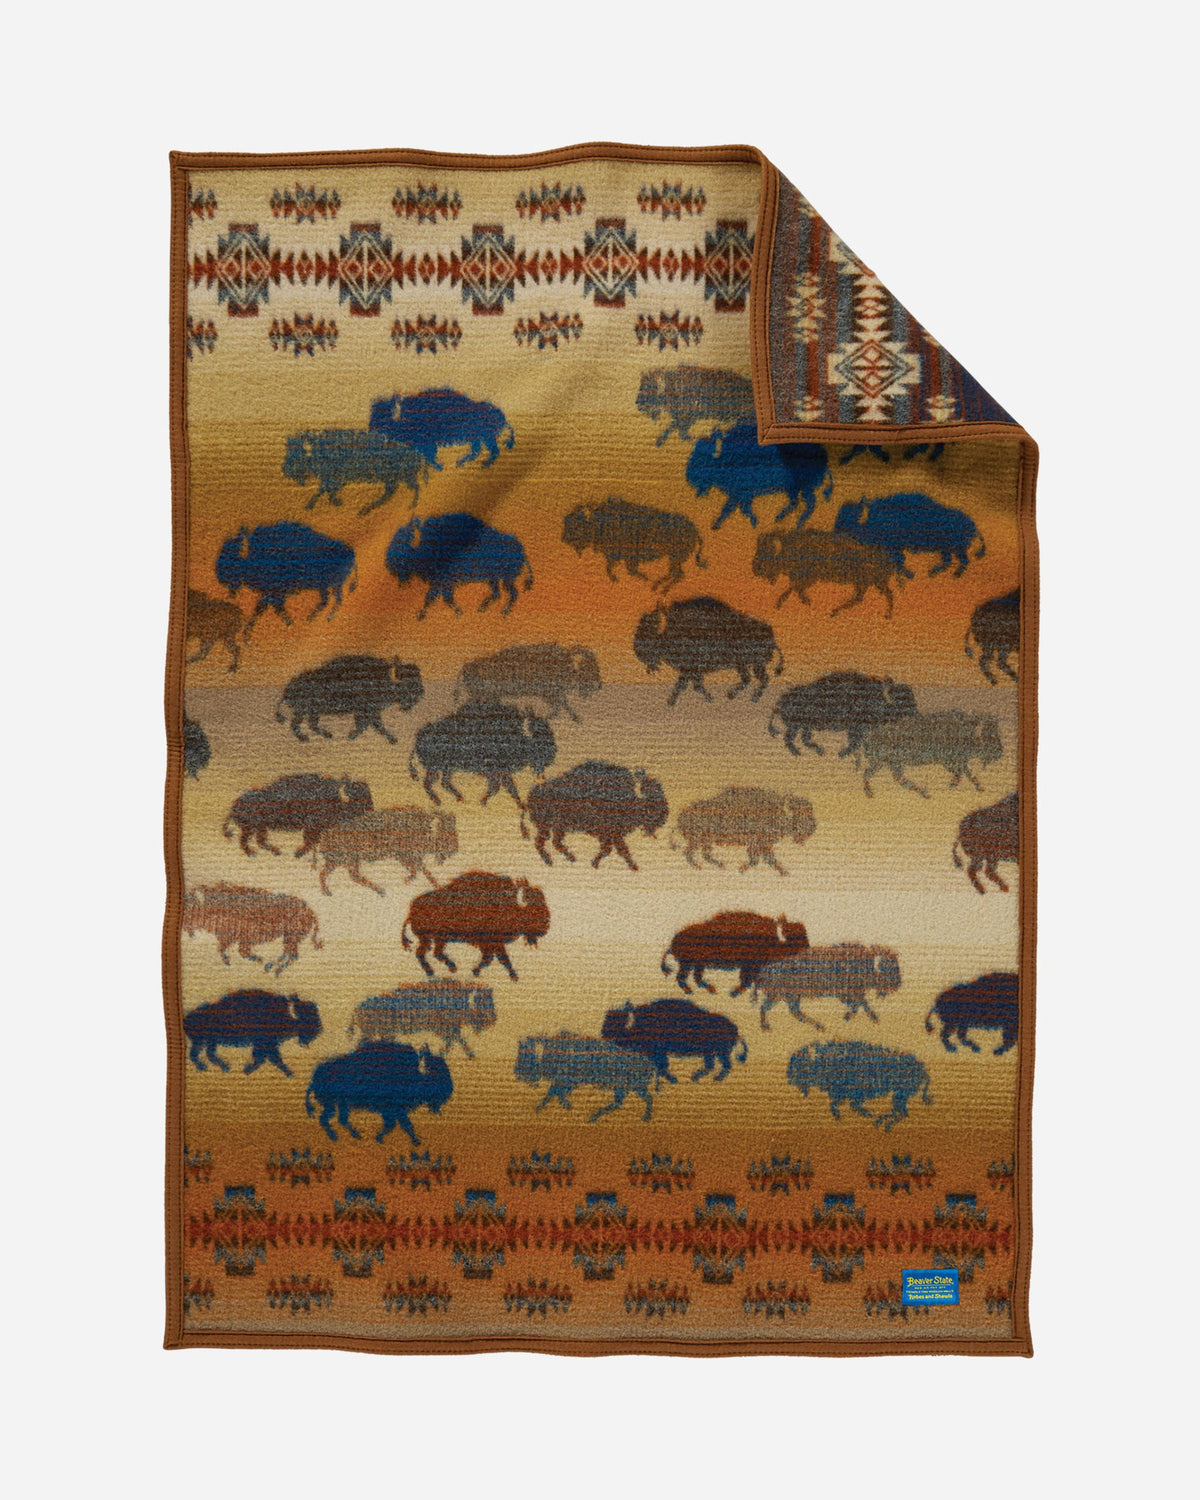 Bison Rush Hour Pendleton Crib Blanket made in Oregon, USA - Blue Mountain Brands USA Home Decor